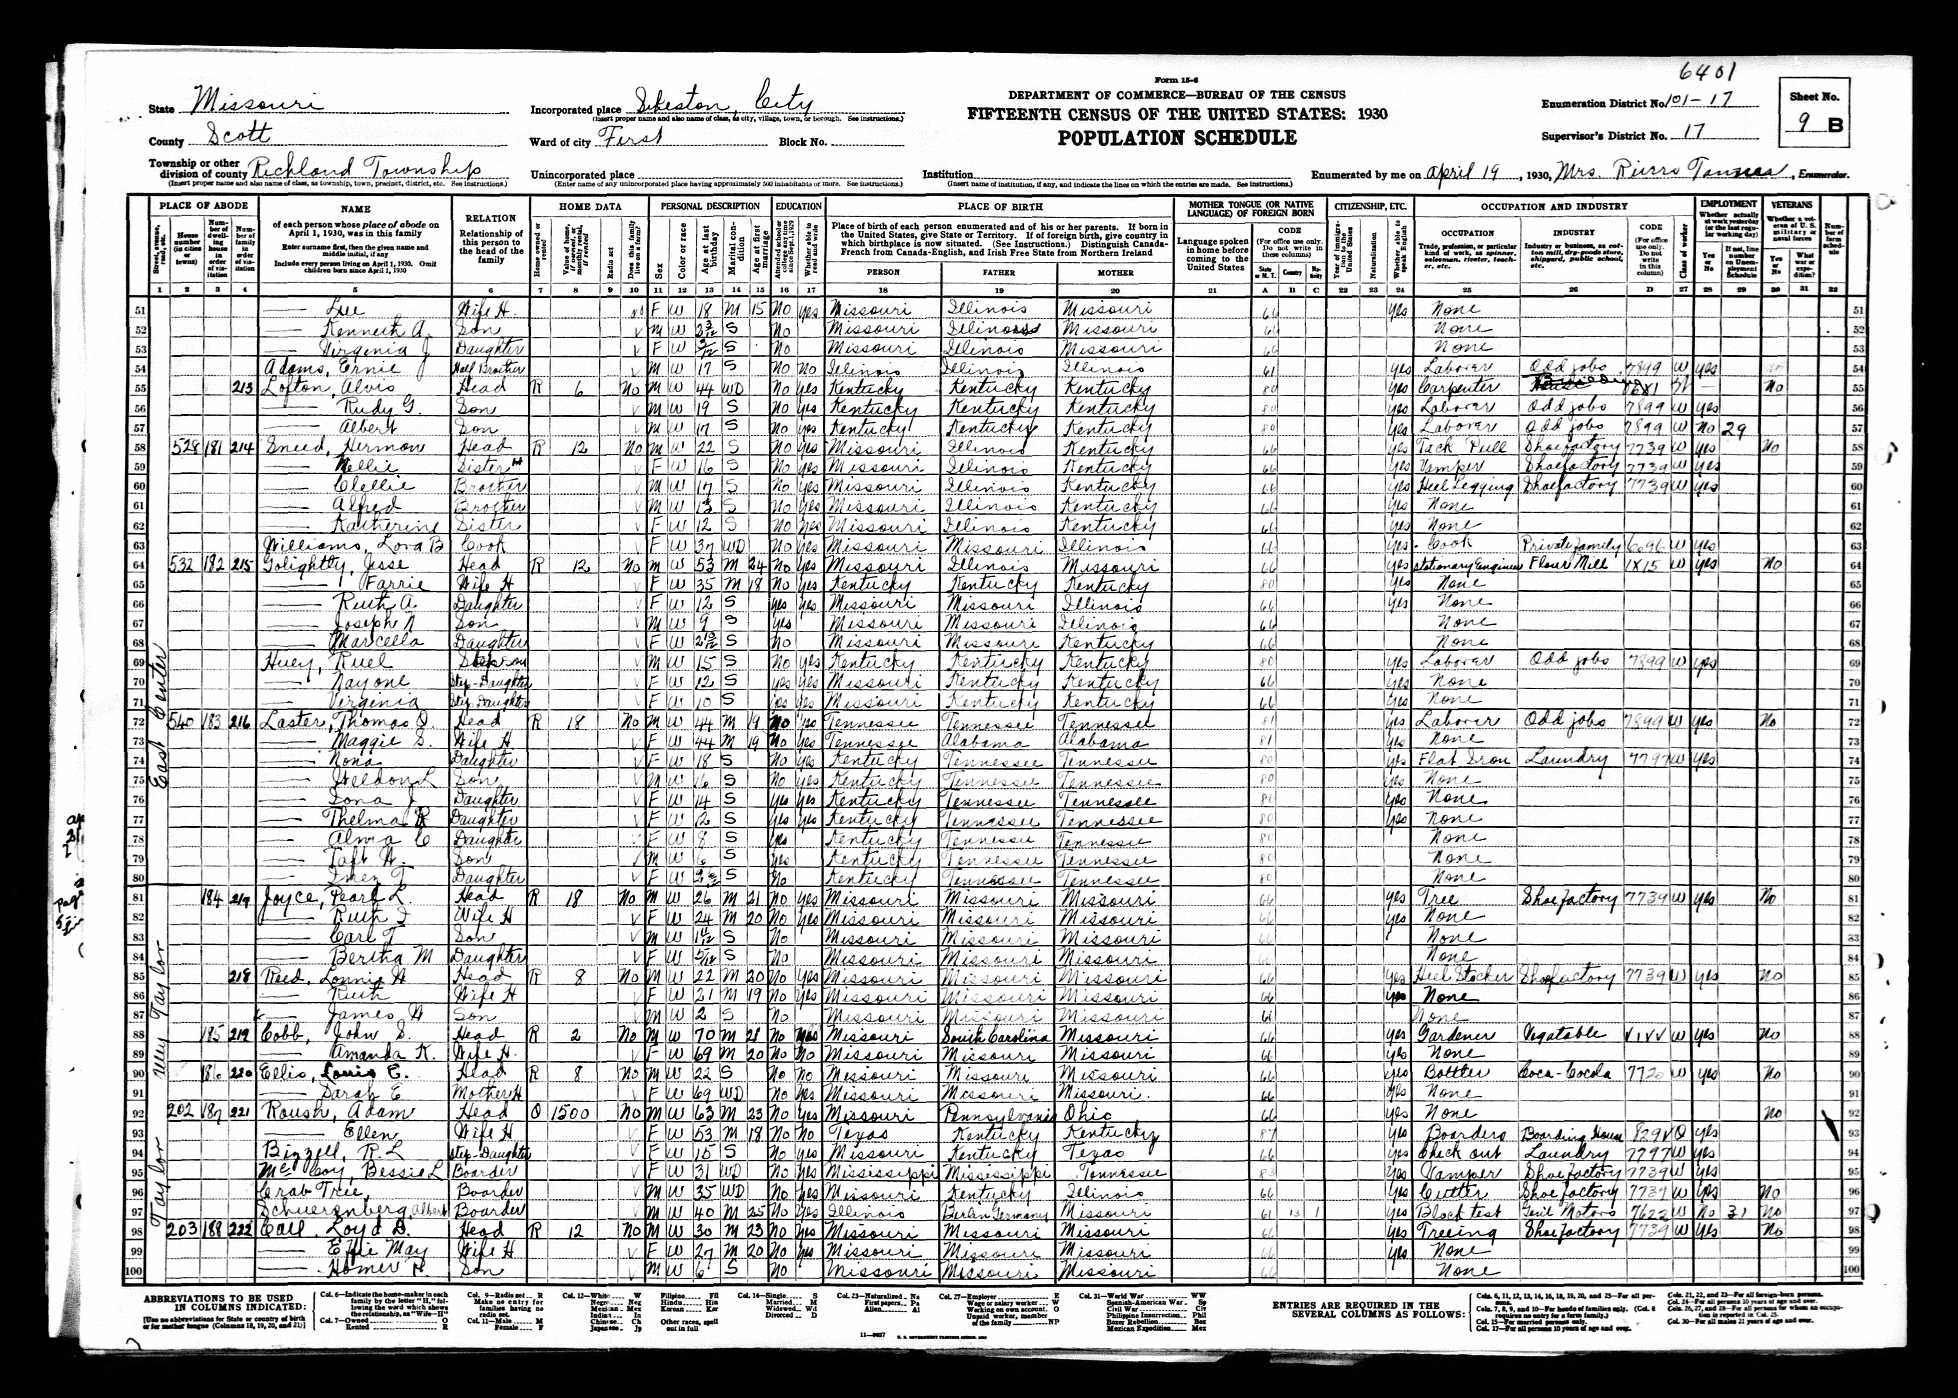 Adam Roush (son of John, grandson of Francis), 1930 Scott County, Missouri, census